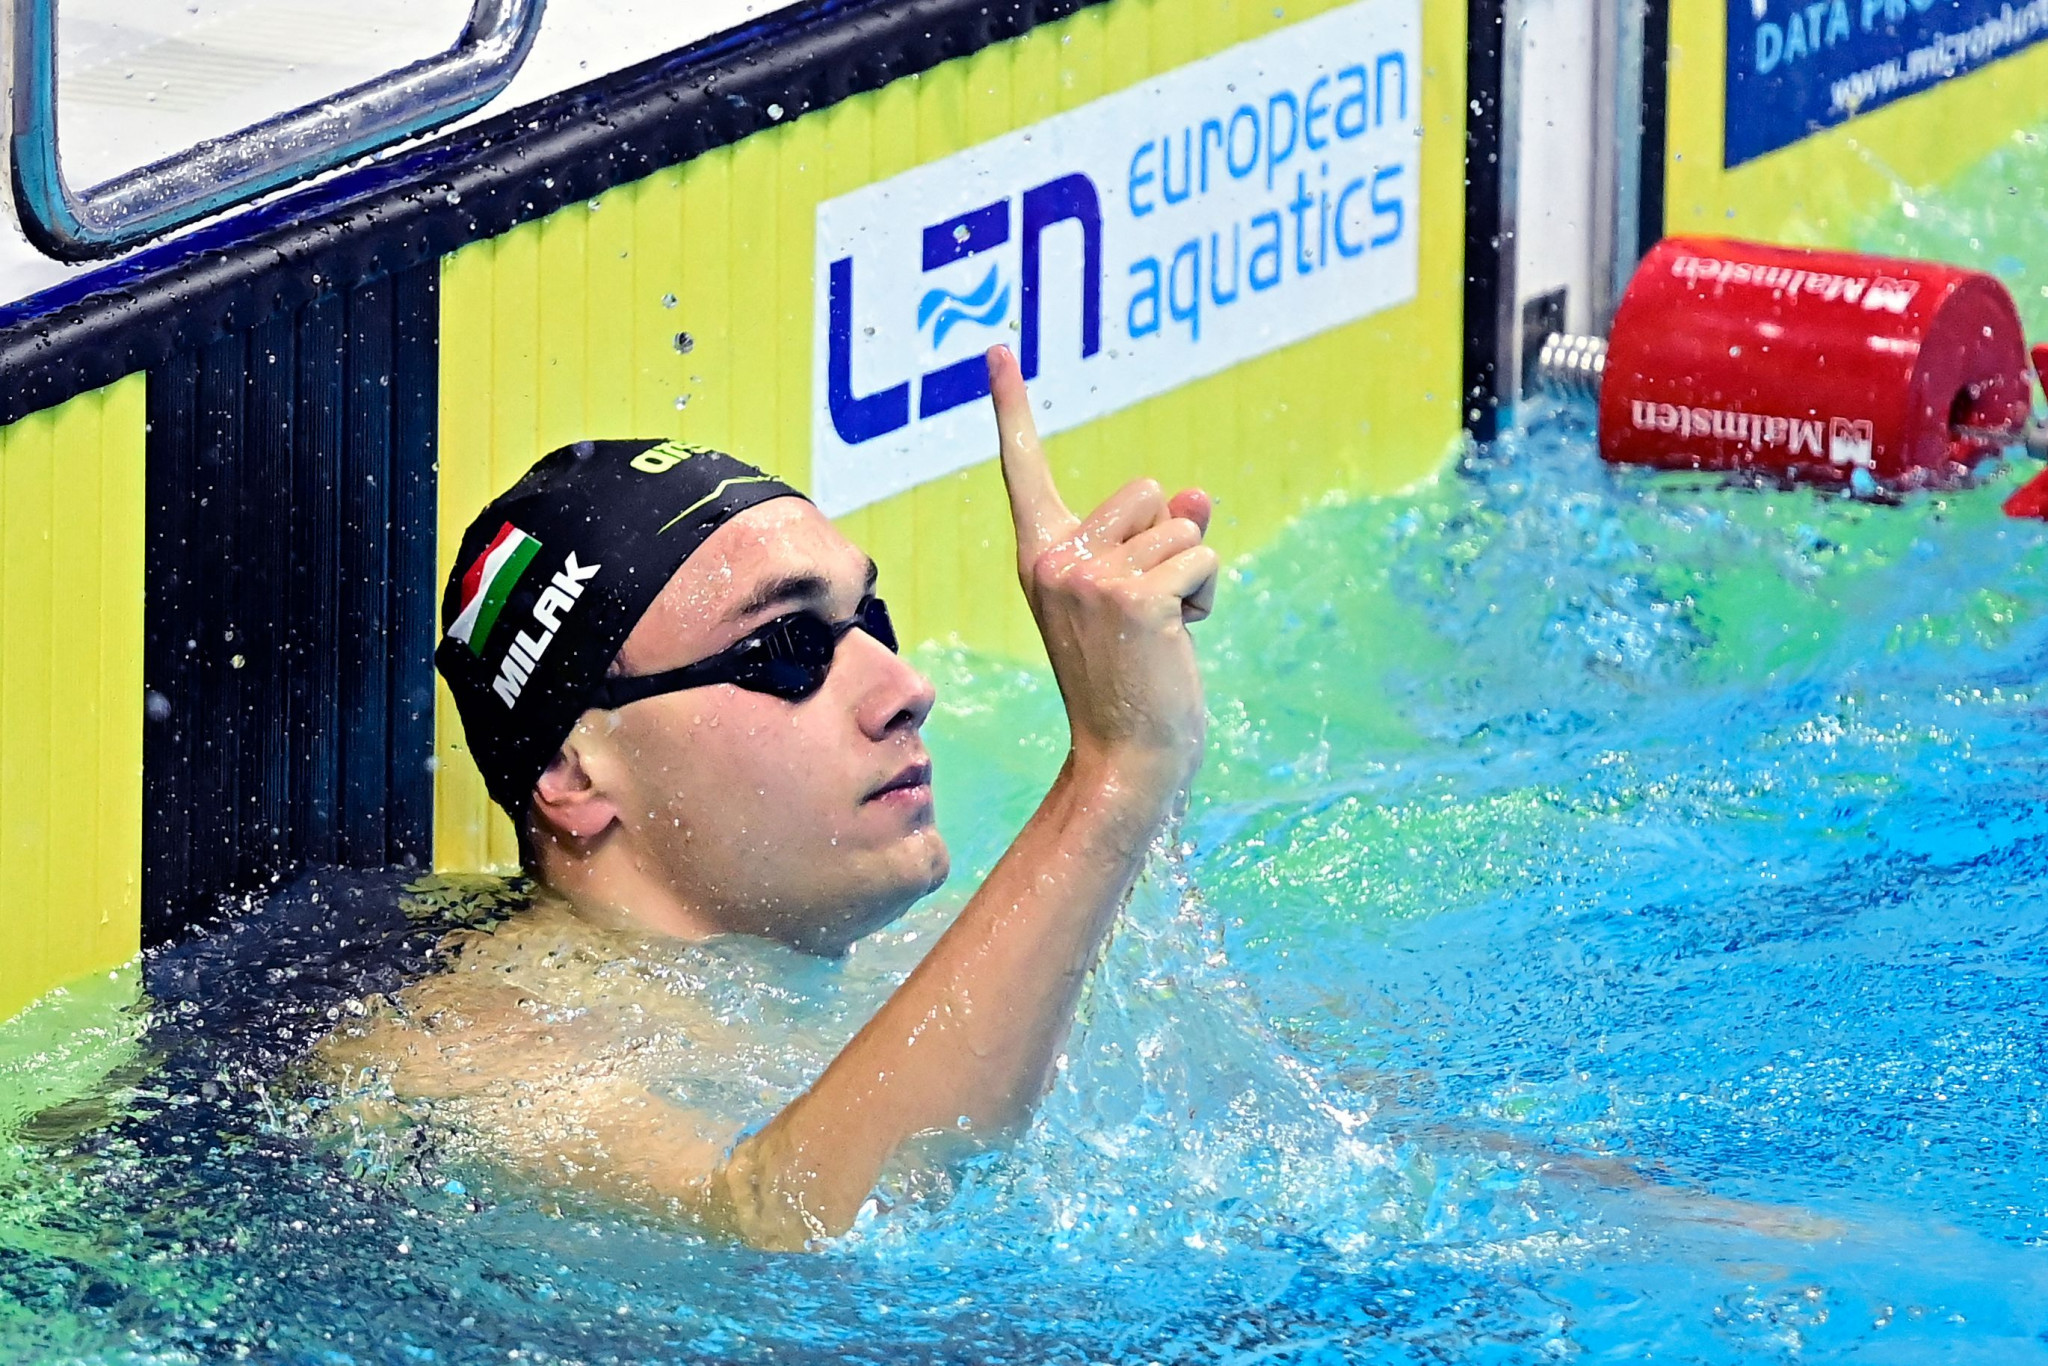 Milak breaks Championship record in home win at European Aquatics Championships 